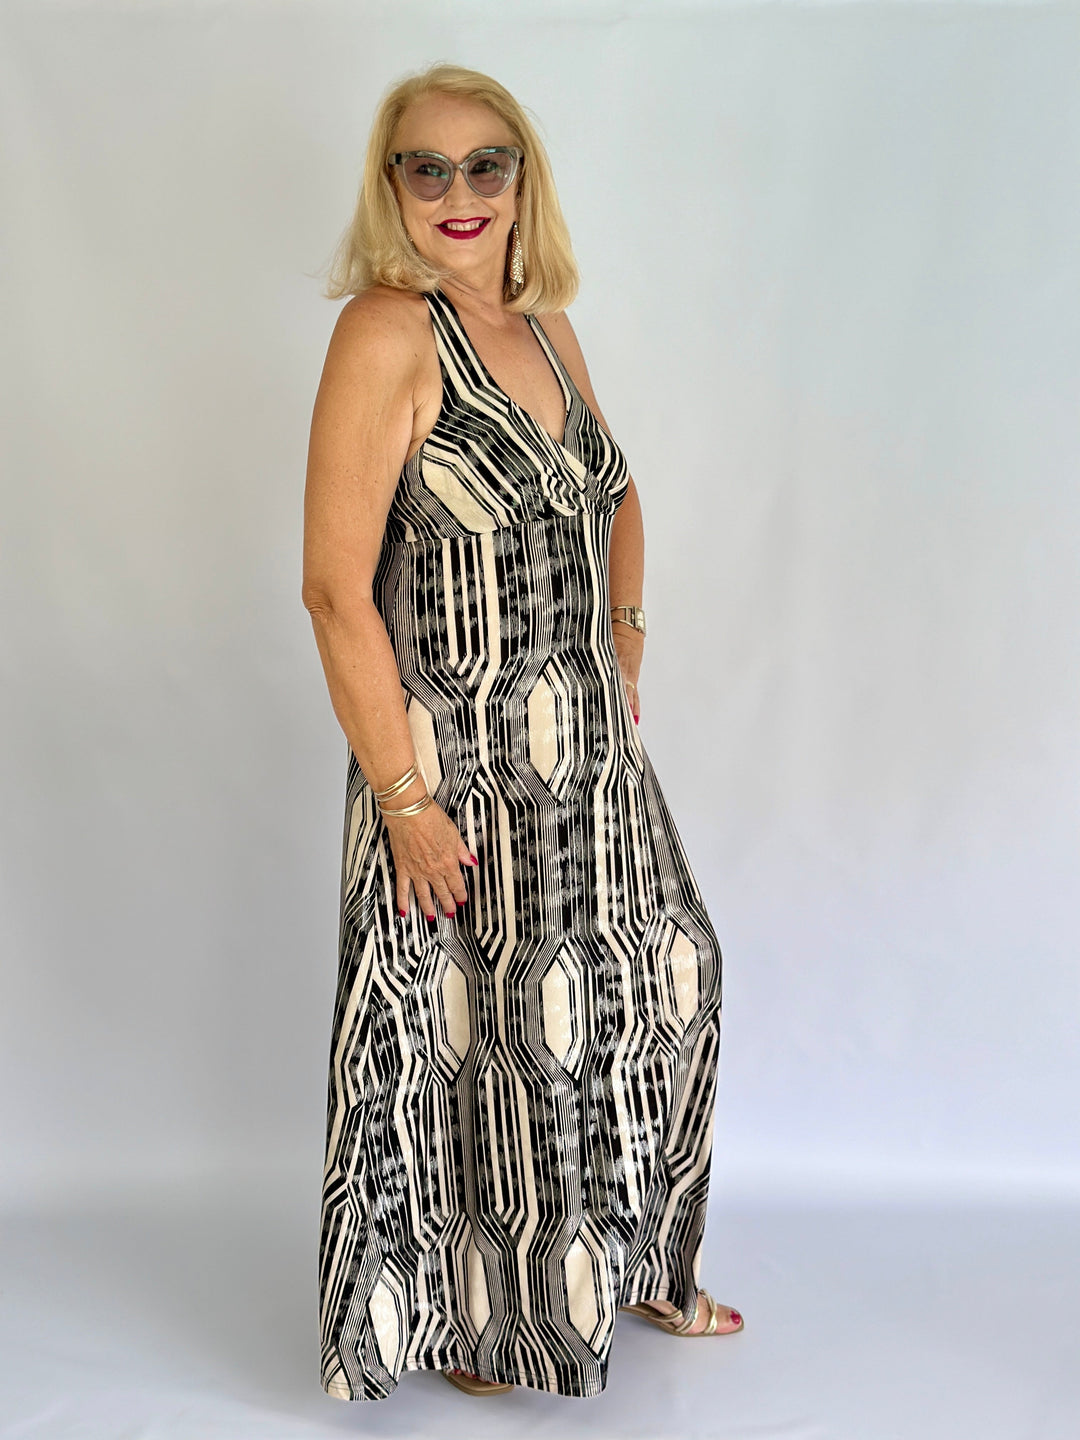 SHAIZE-DRESS-Wendy Bashford Designs